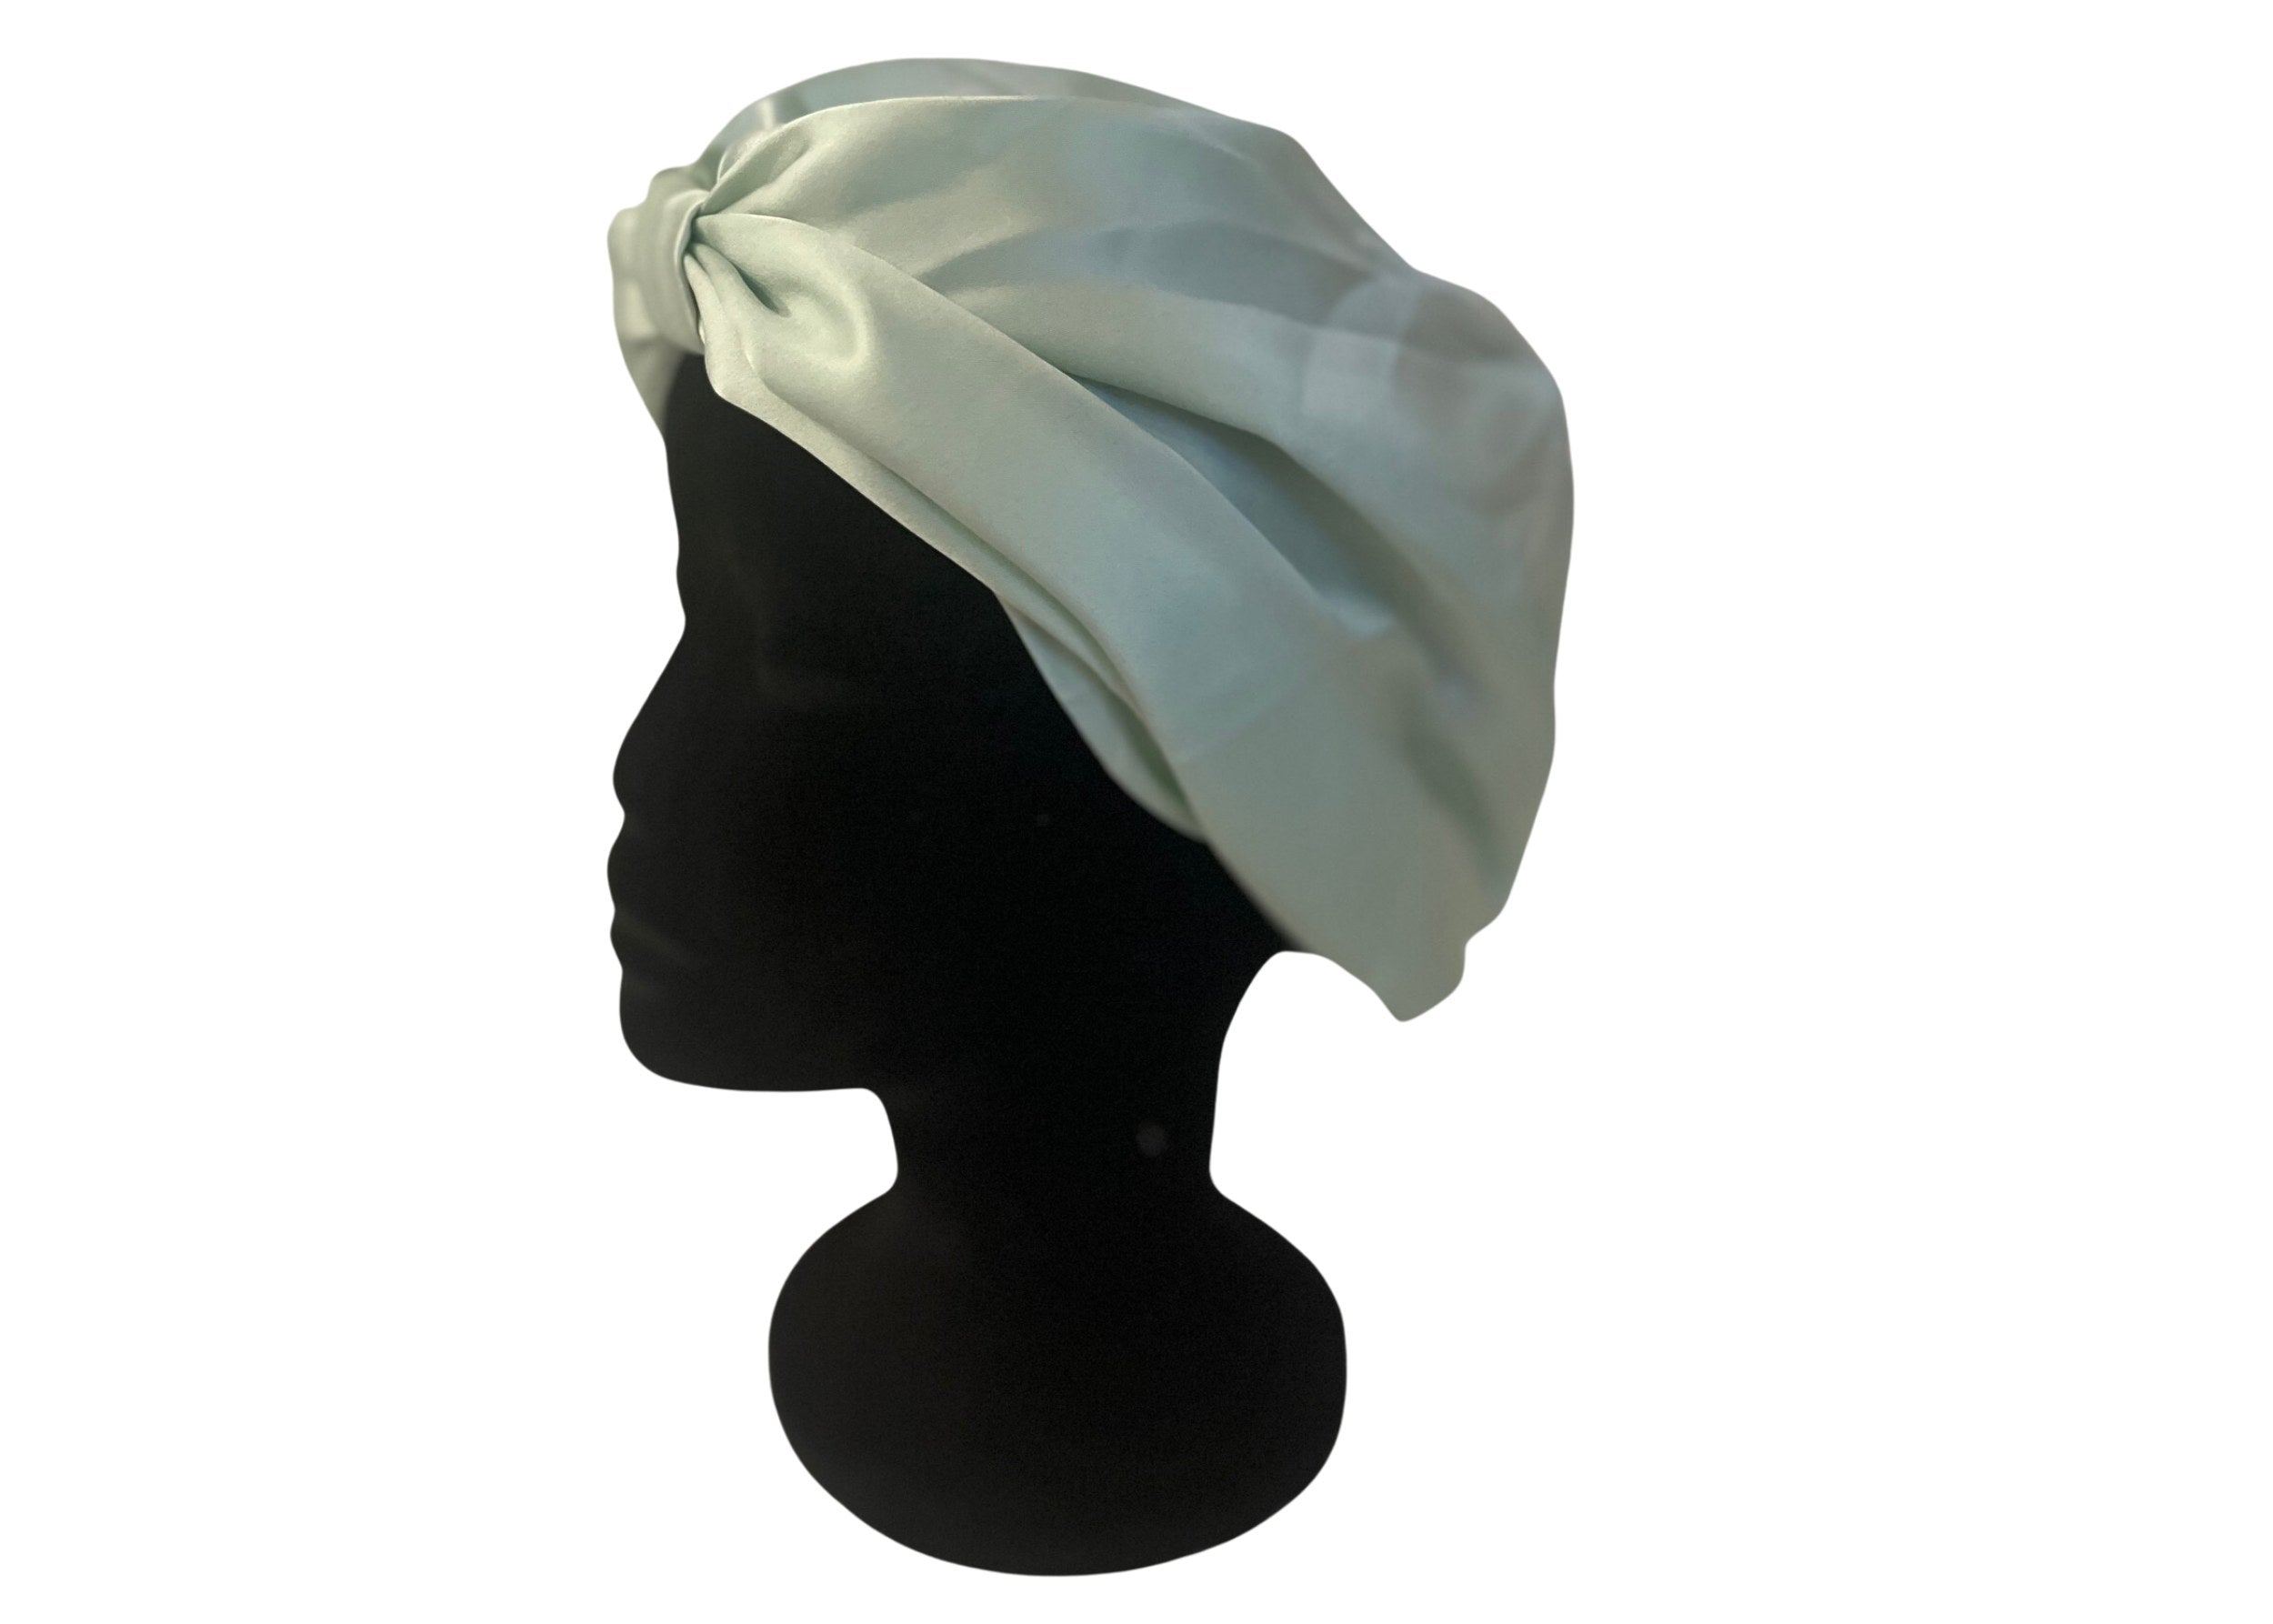  Mint Square Silk Night Cap/Bonnet - Mint Square Silk Night Cap/Bonnet -  -  - Luxurious Fine Silk by Forsters Finery